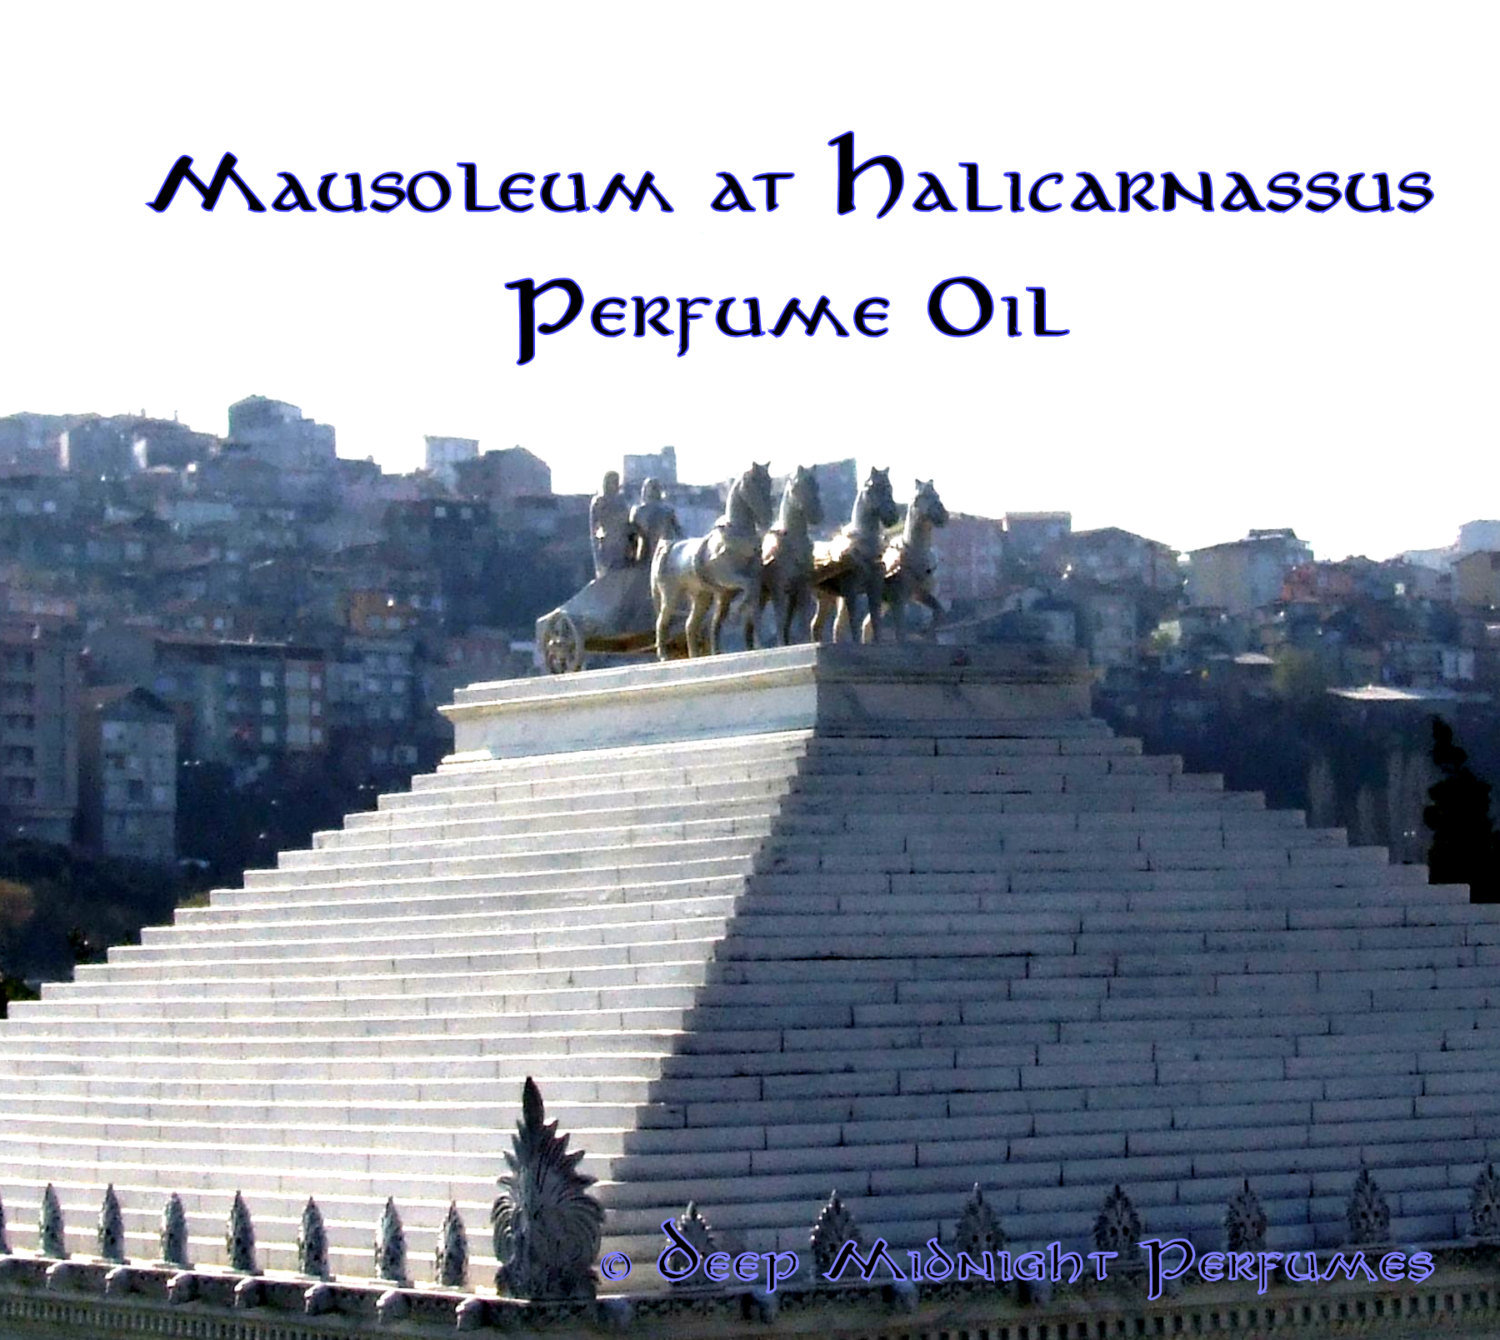 Mausoleum at Halicarnassus™ Perfume Oil - Neroli Attar, Champaka, Narcissus, Vanilla Bean - Ancient Perfume - Seven Wonders™ Perfume Collection